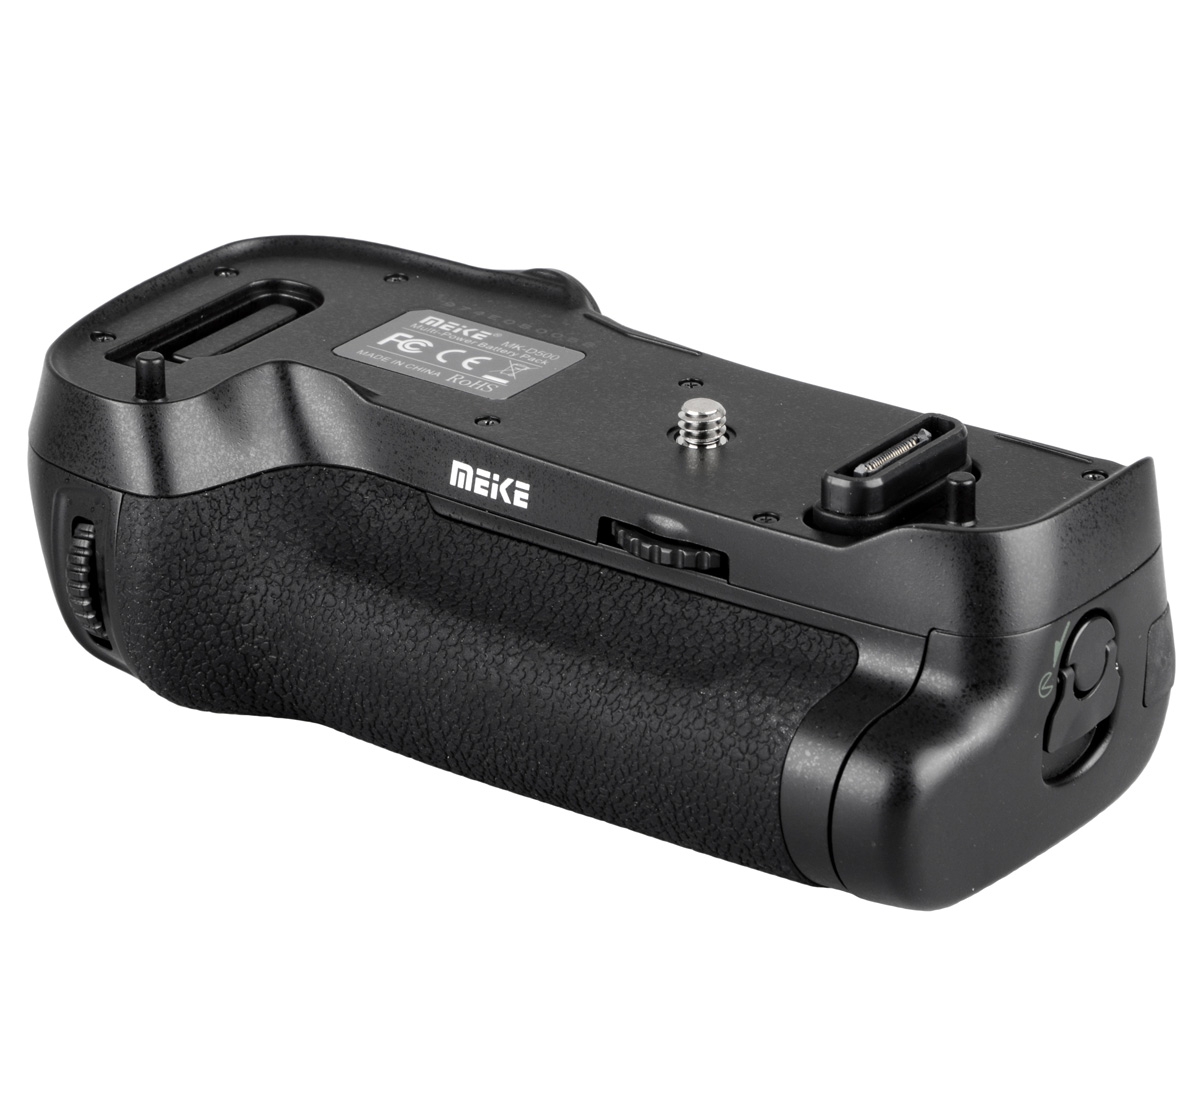 Meike Batteriegriff Set MK-D500 für Nikon D500 wie MB-D17 inkl. 1x ayex EN-EL15 Akku